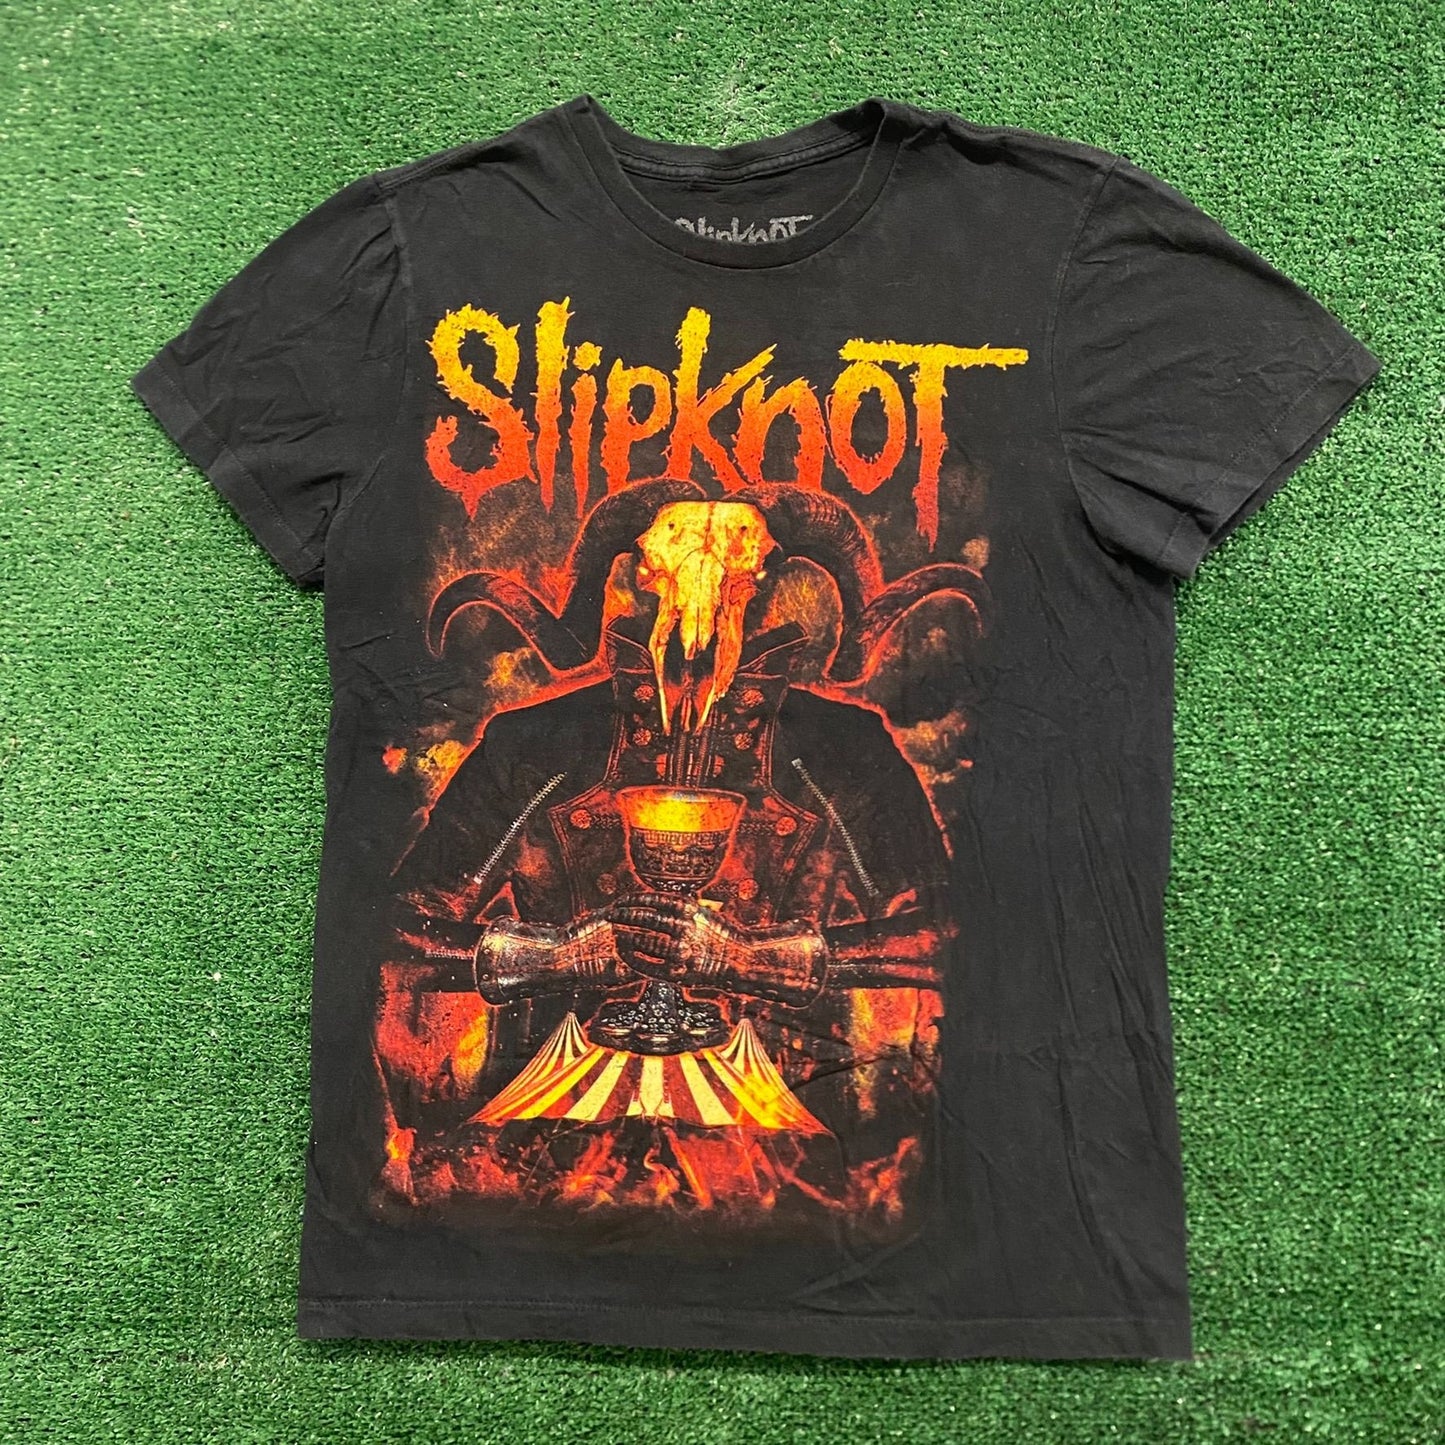 Agent Thrift Band Vintage T-Shirt Metal Slipknot –